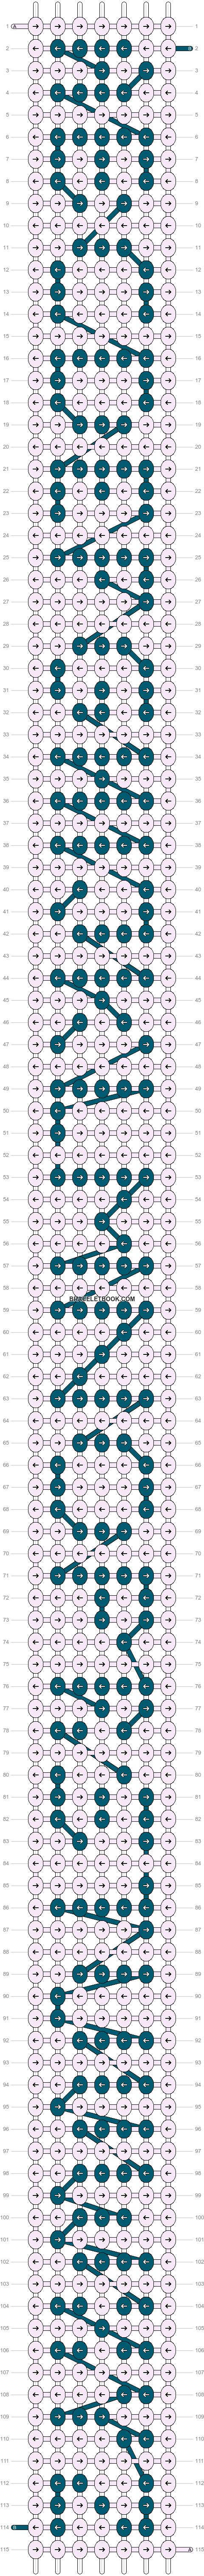 Alpha pattern #62167 variation #113040 pattern